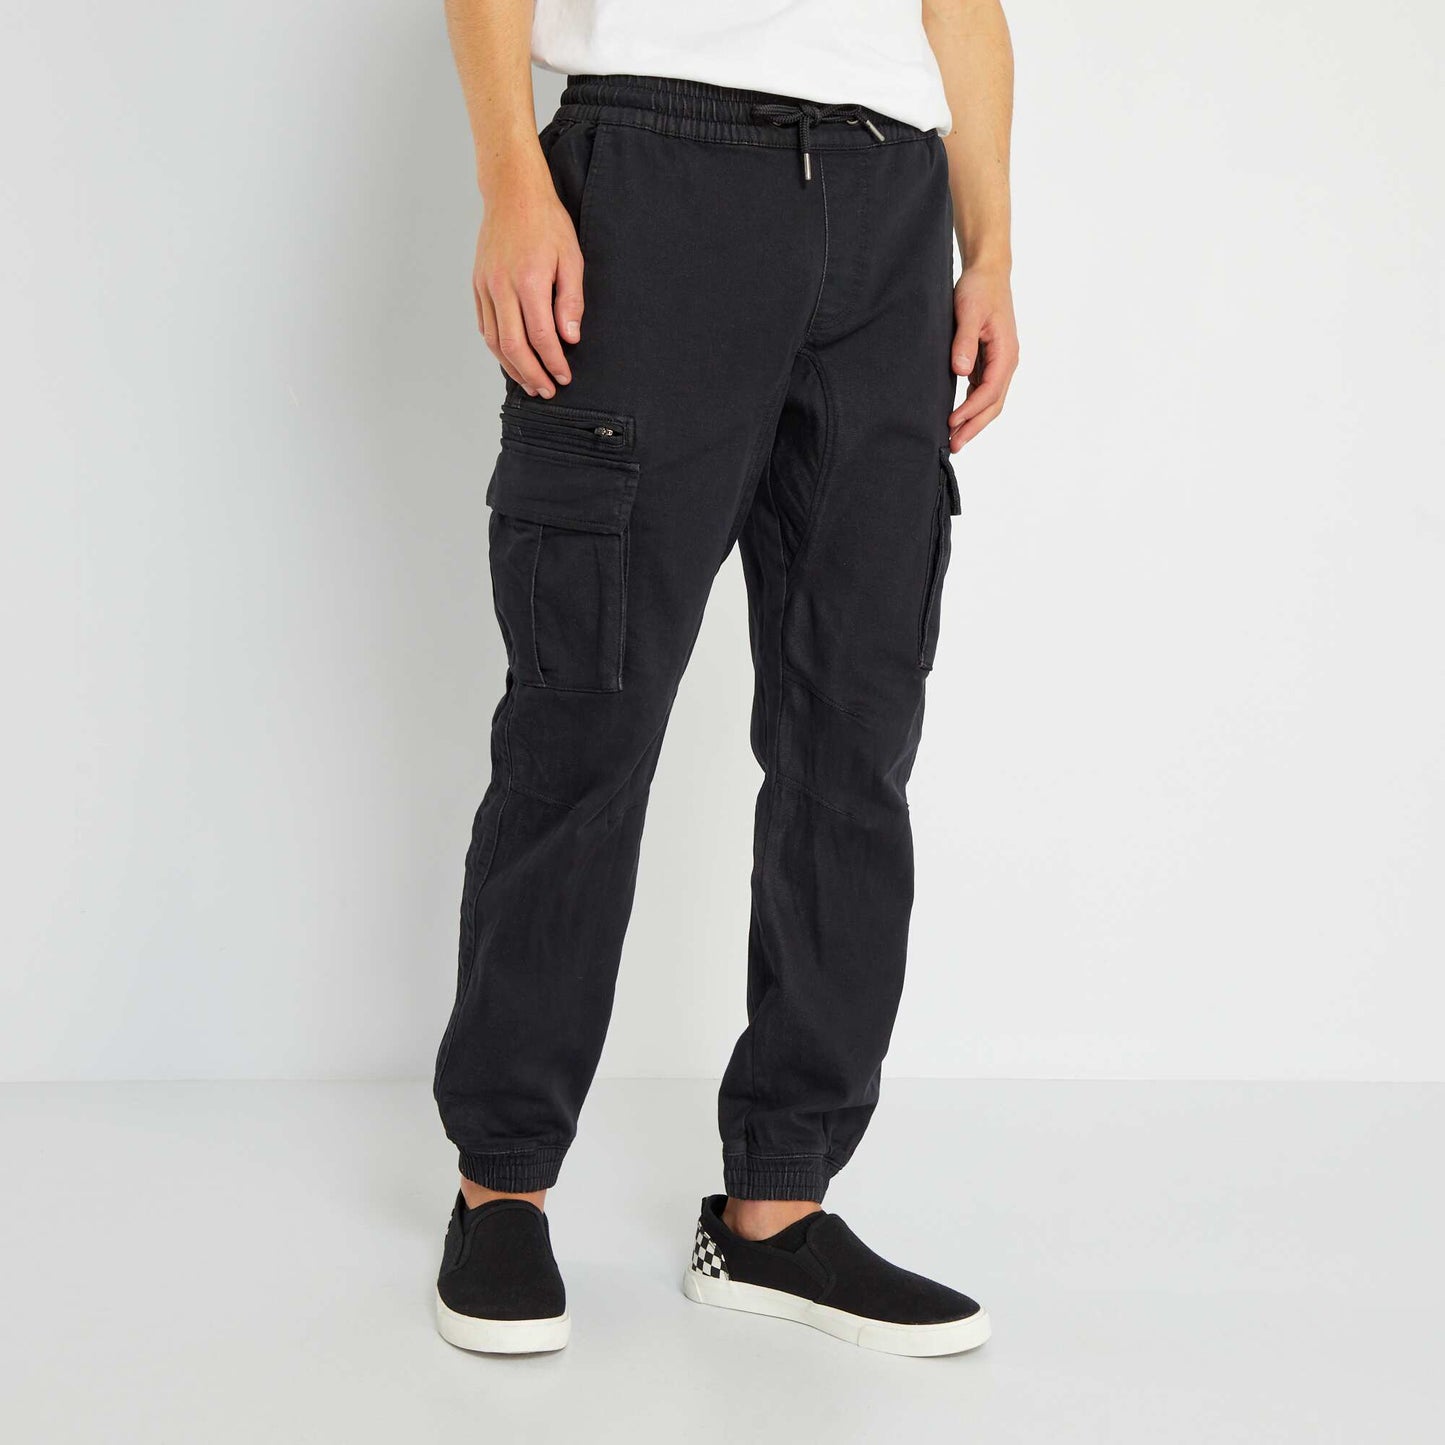 Pantalón jean jogger negro